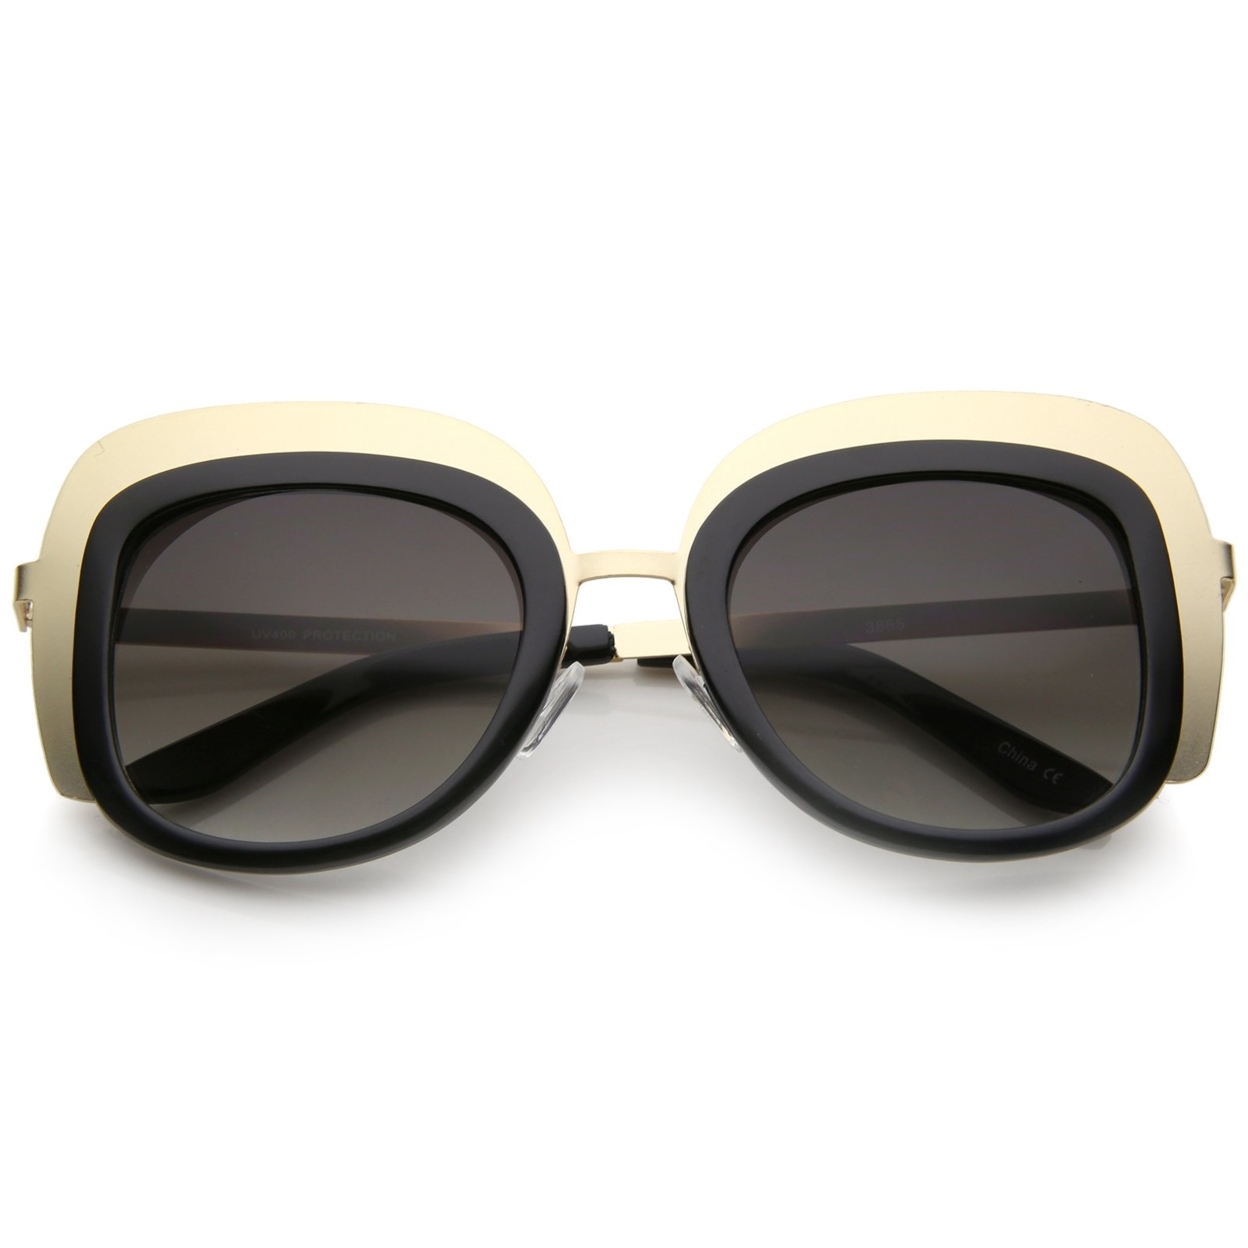 Women's Oversize Two-Tone Metal Frame Border Square Sunglasses 43mm - Gold-White / Amber